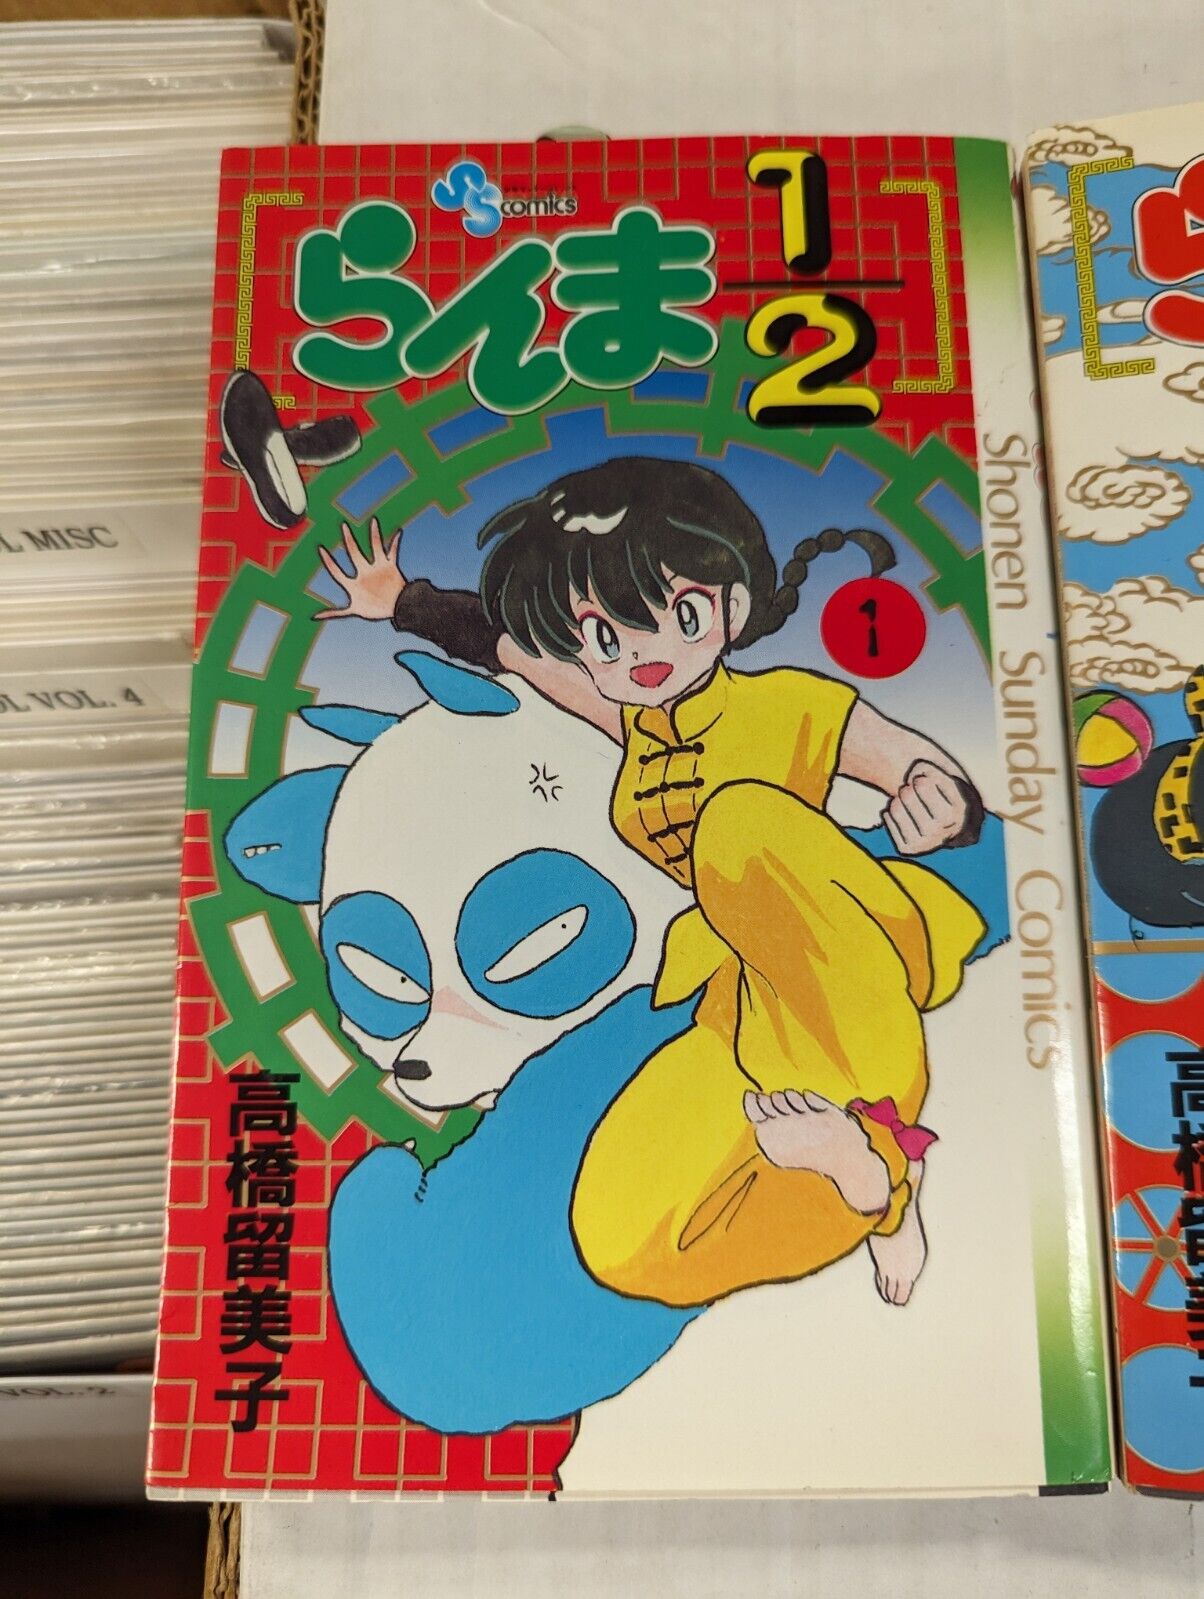 Ranma 1/2 Volume 1 & 2 Japanese Shonen Sunday Comics